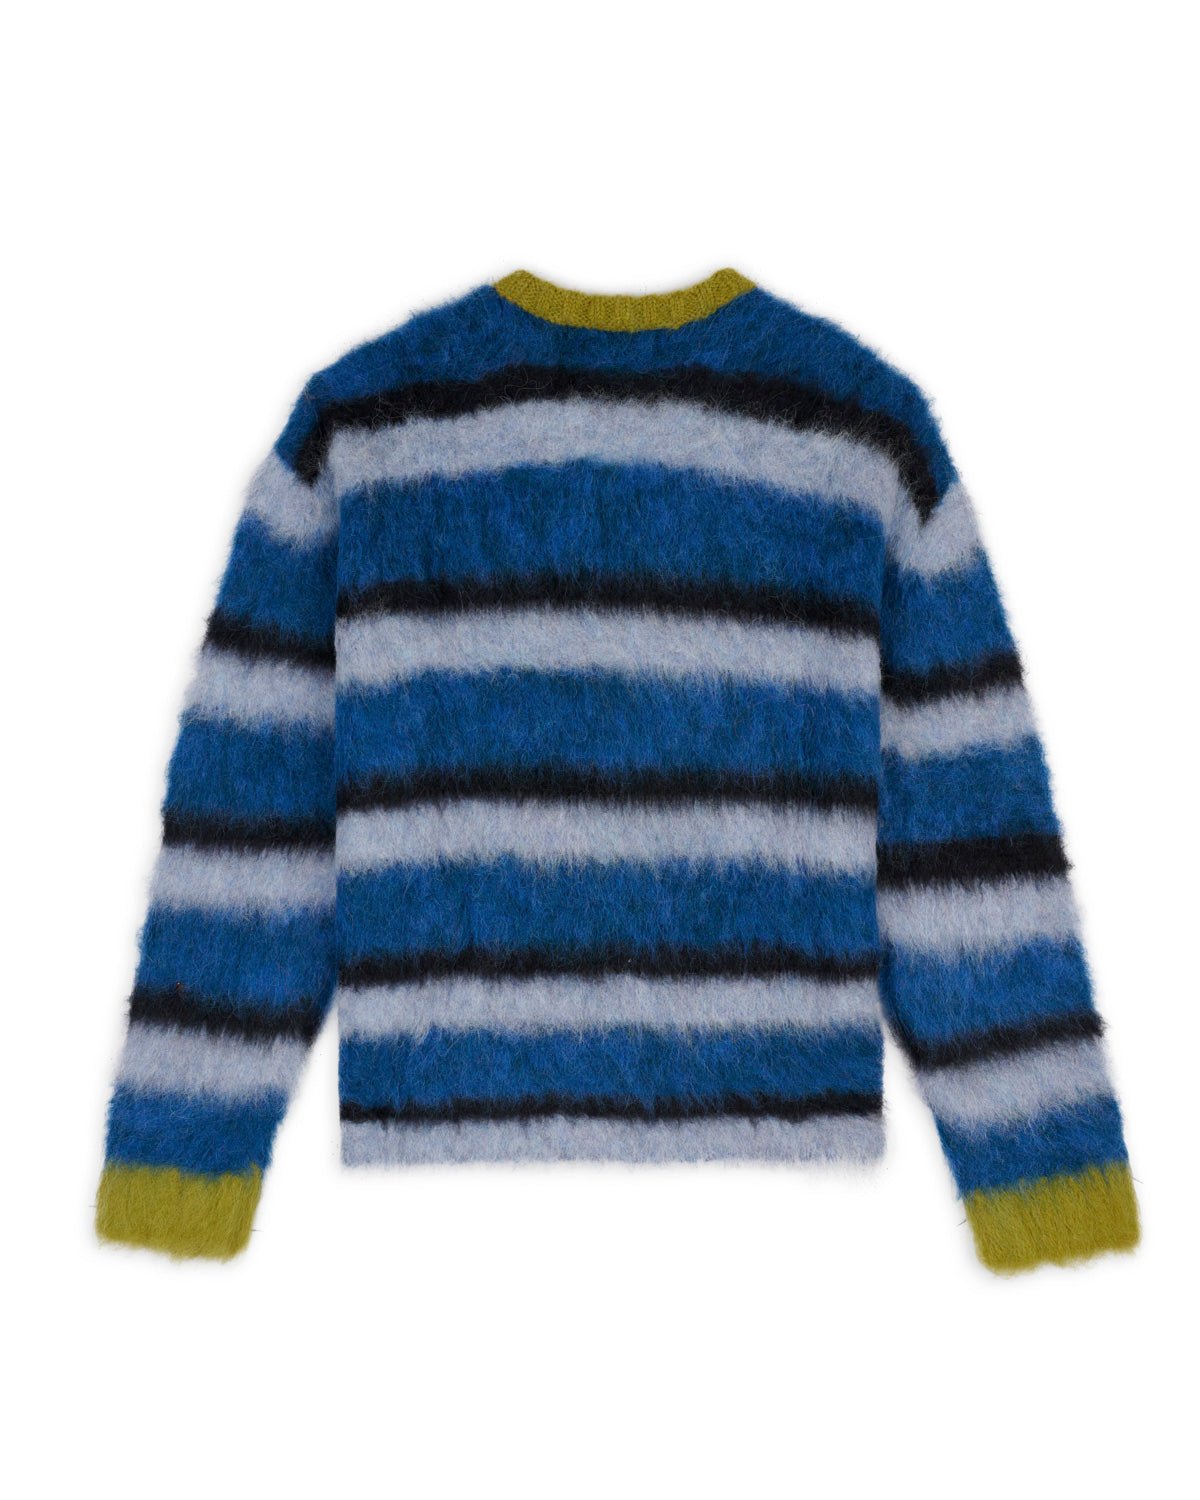 Stripe Boxy Knit Sweater - Blue Multi